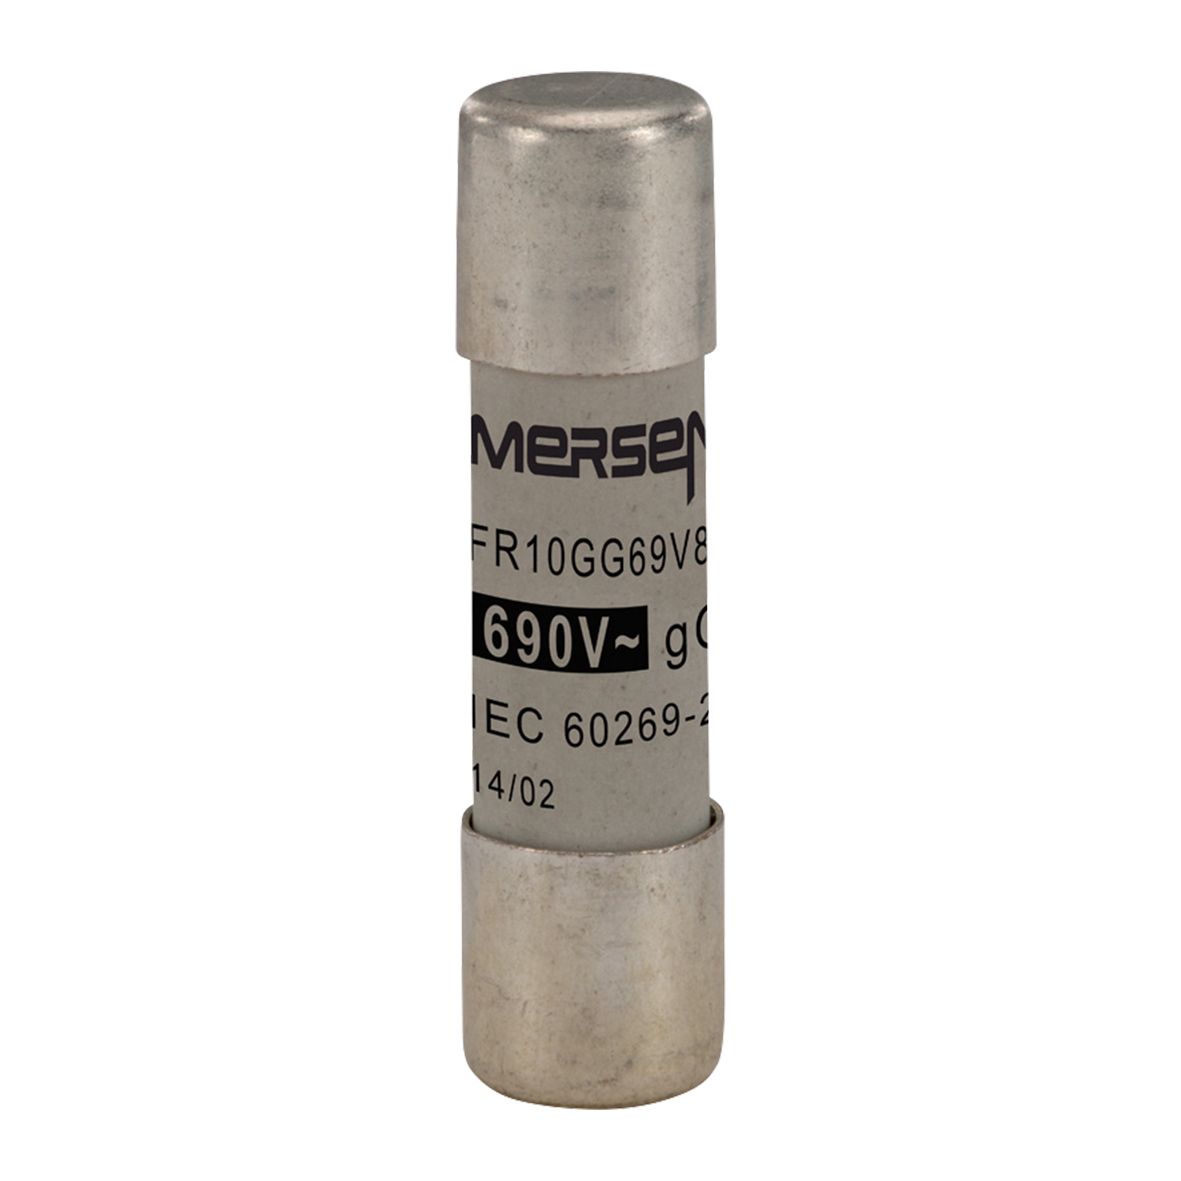 W302791 - Cylindrical fuse-link gG 690VAC 10.3x38, 8A